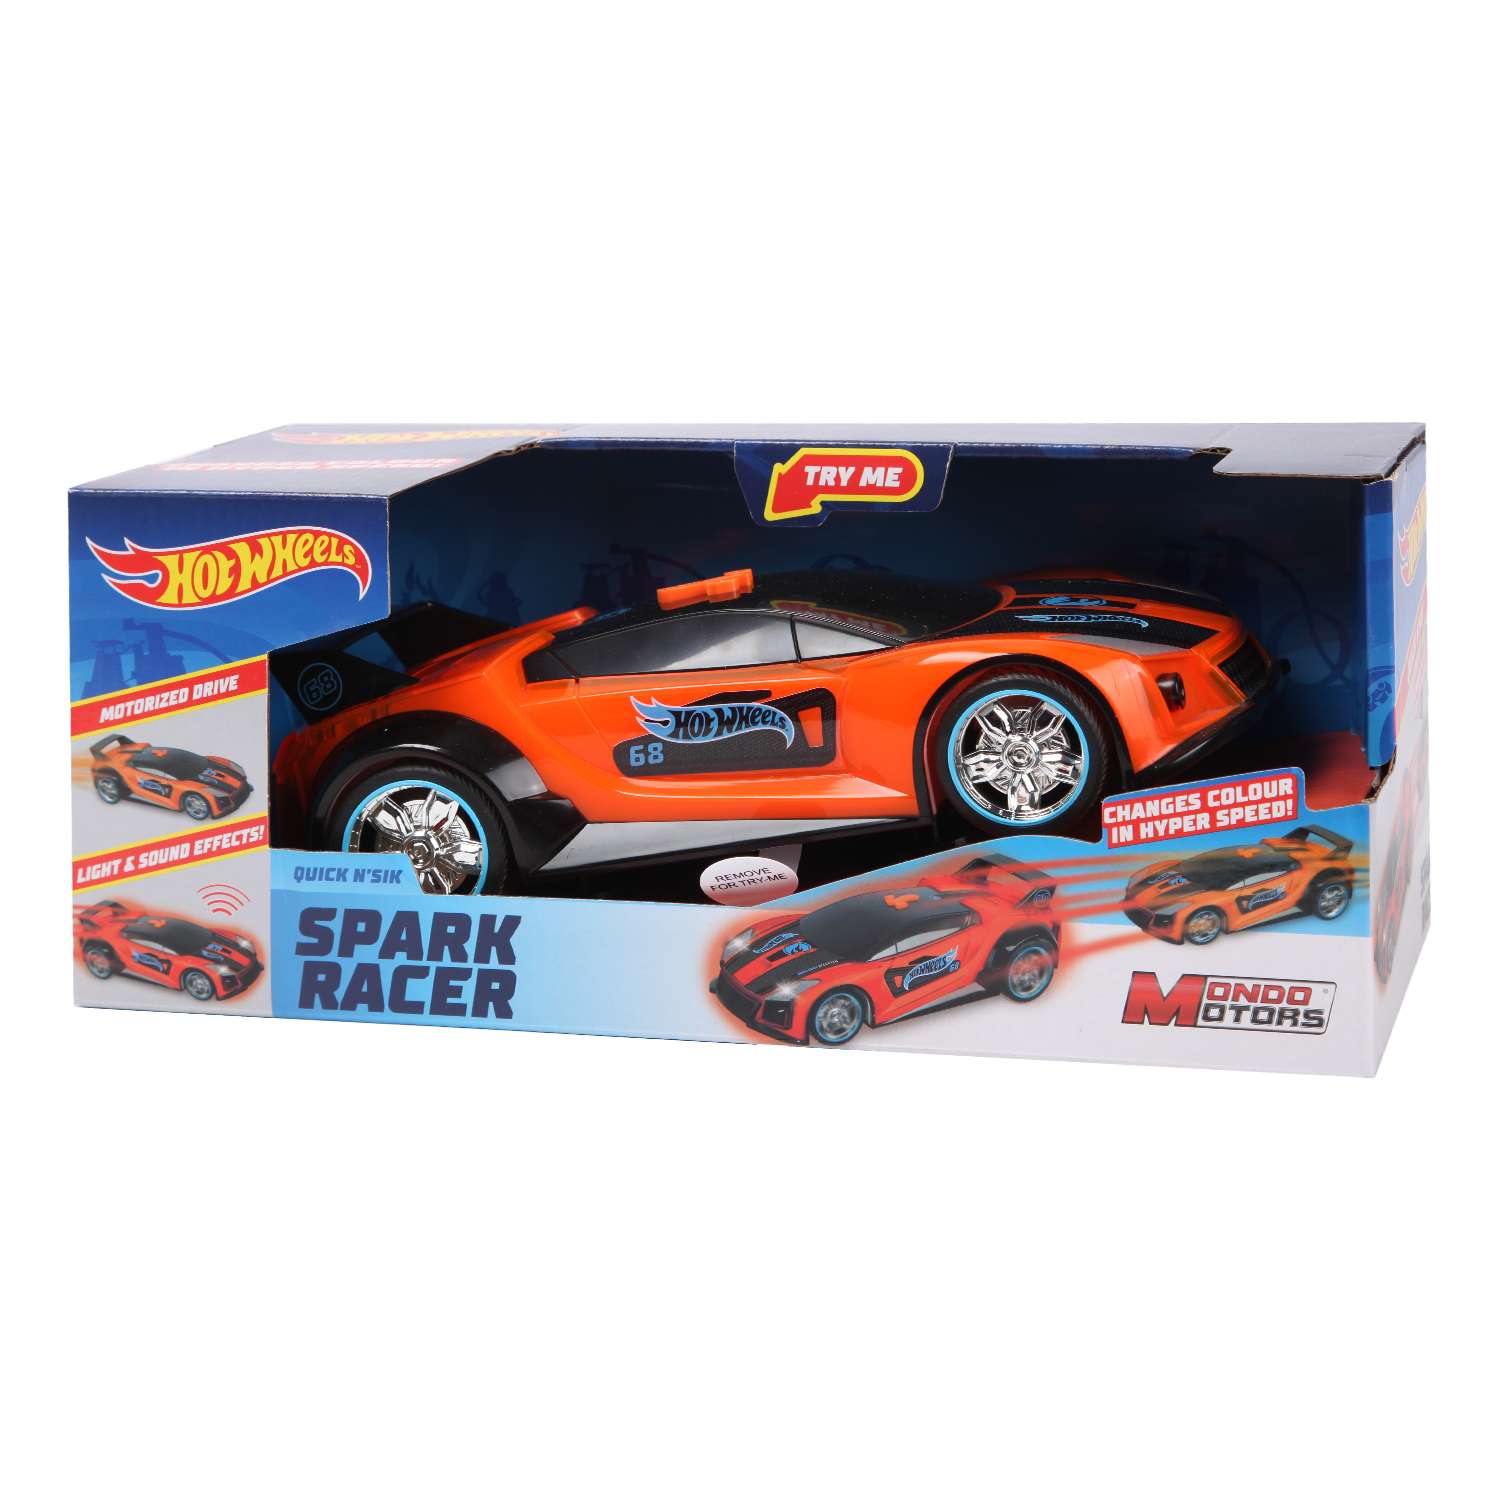 Машина Hot Wheels Spark Racer Quick N sik 51197 51197 - фото 2